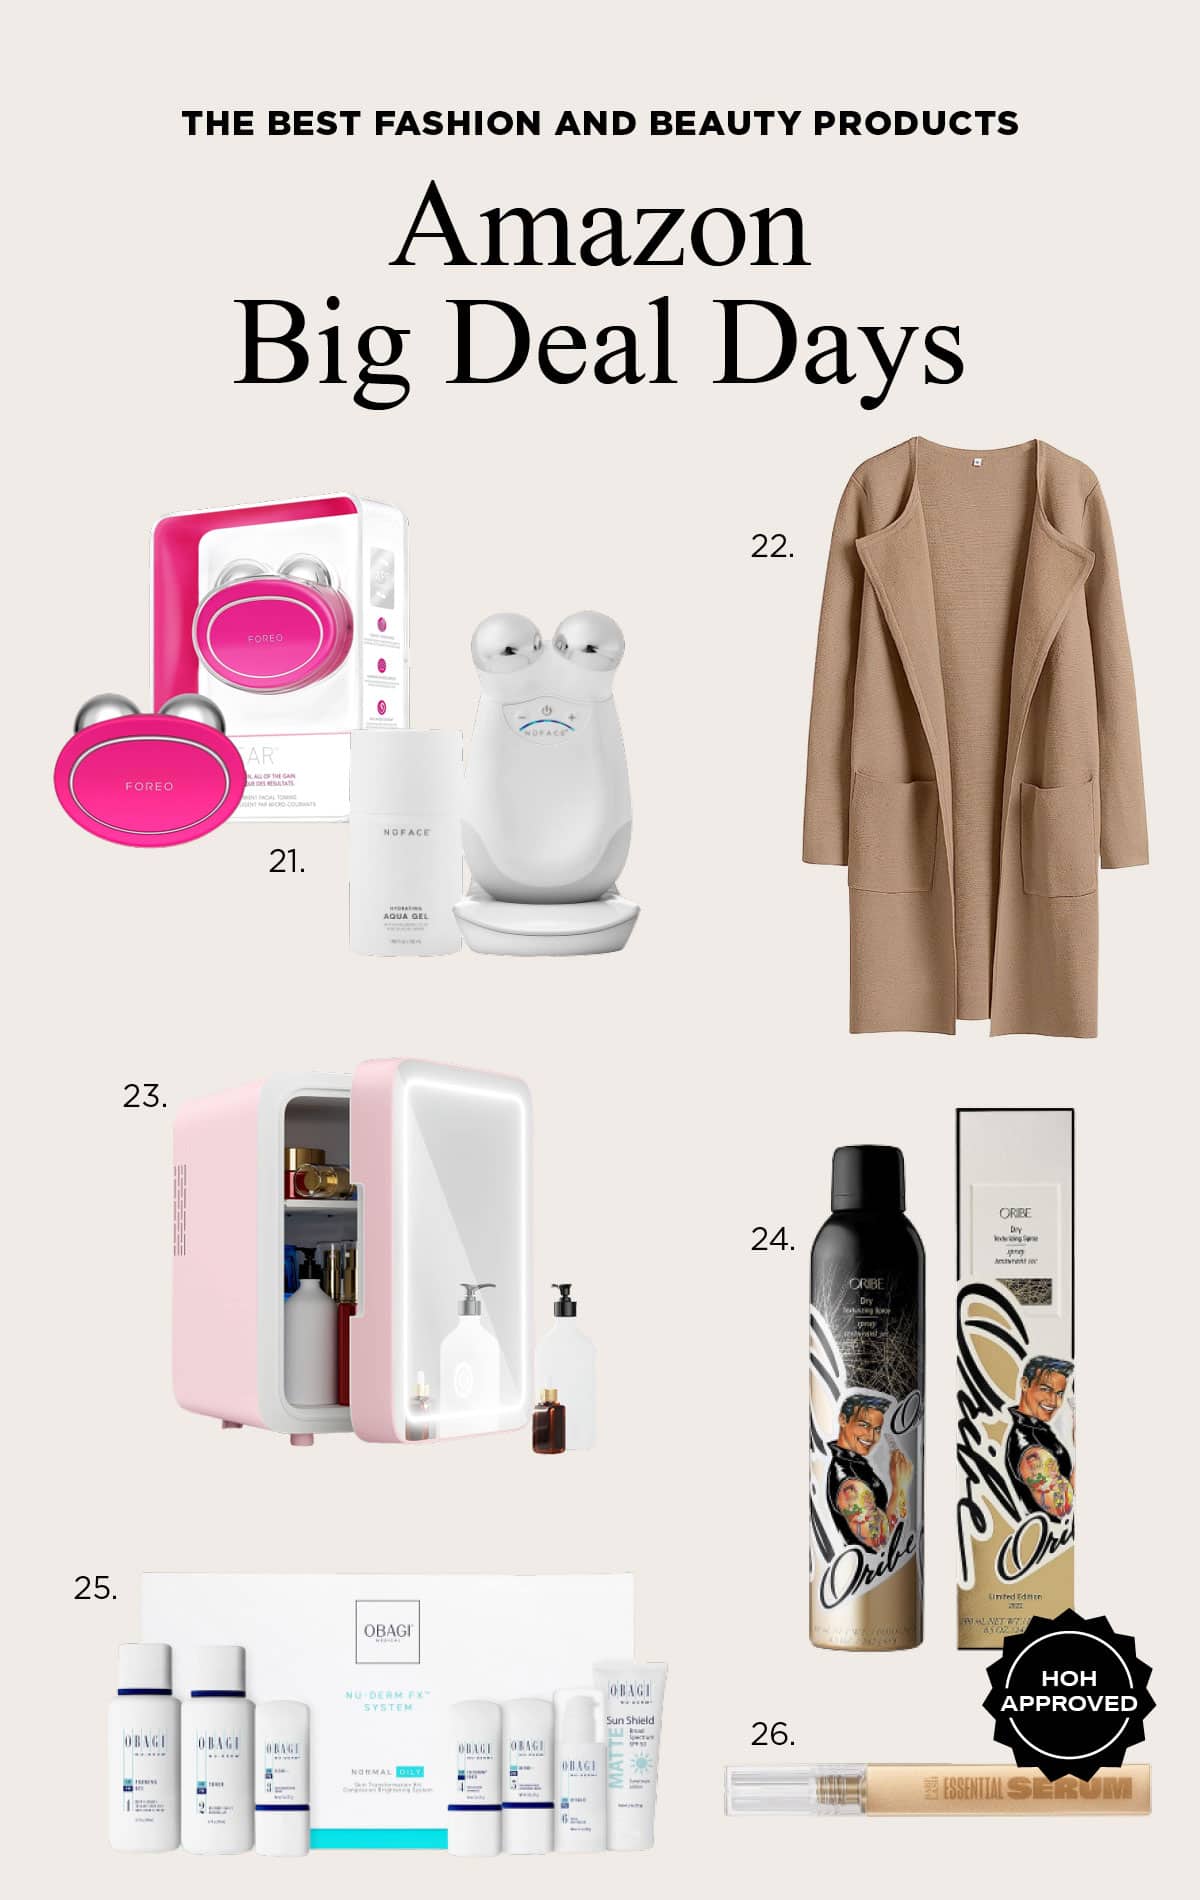 Prime Big Deal Days 2023: The Best Deals 🤑